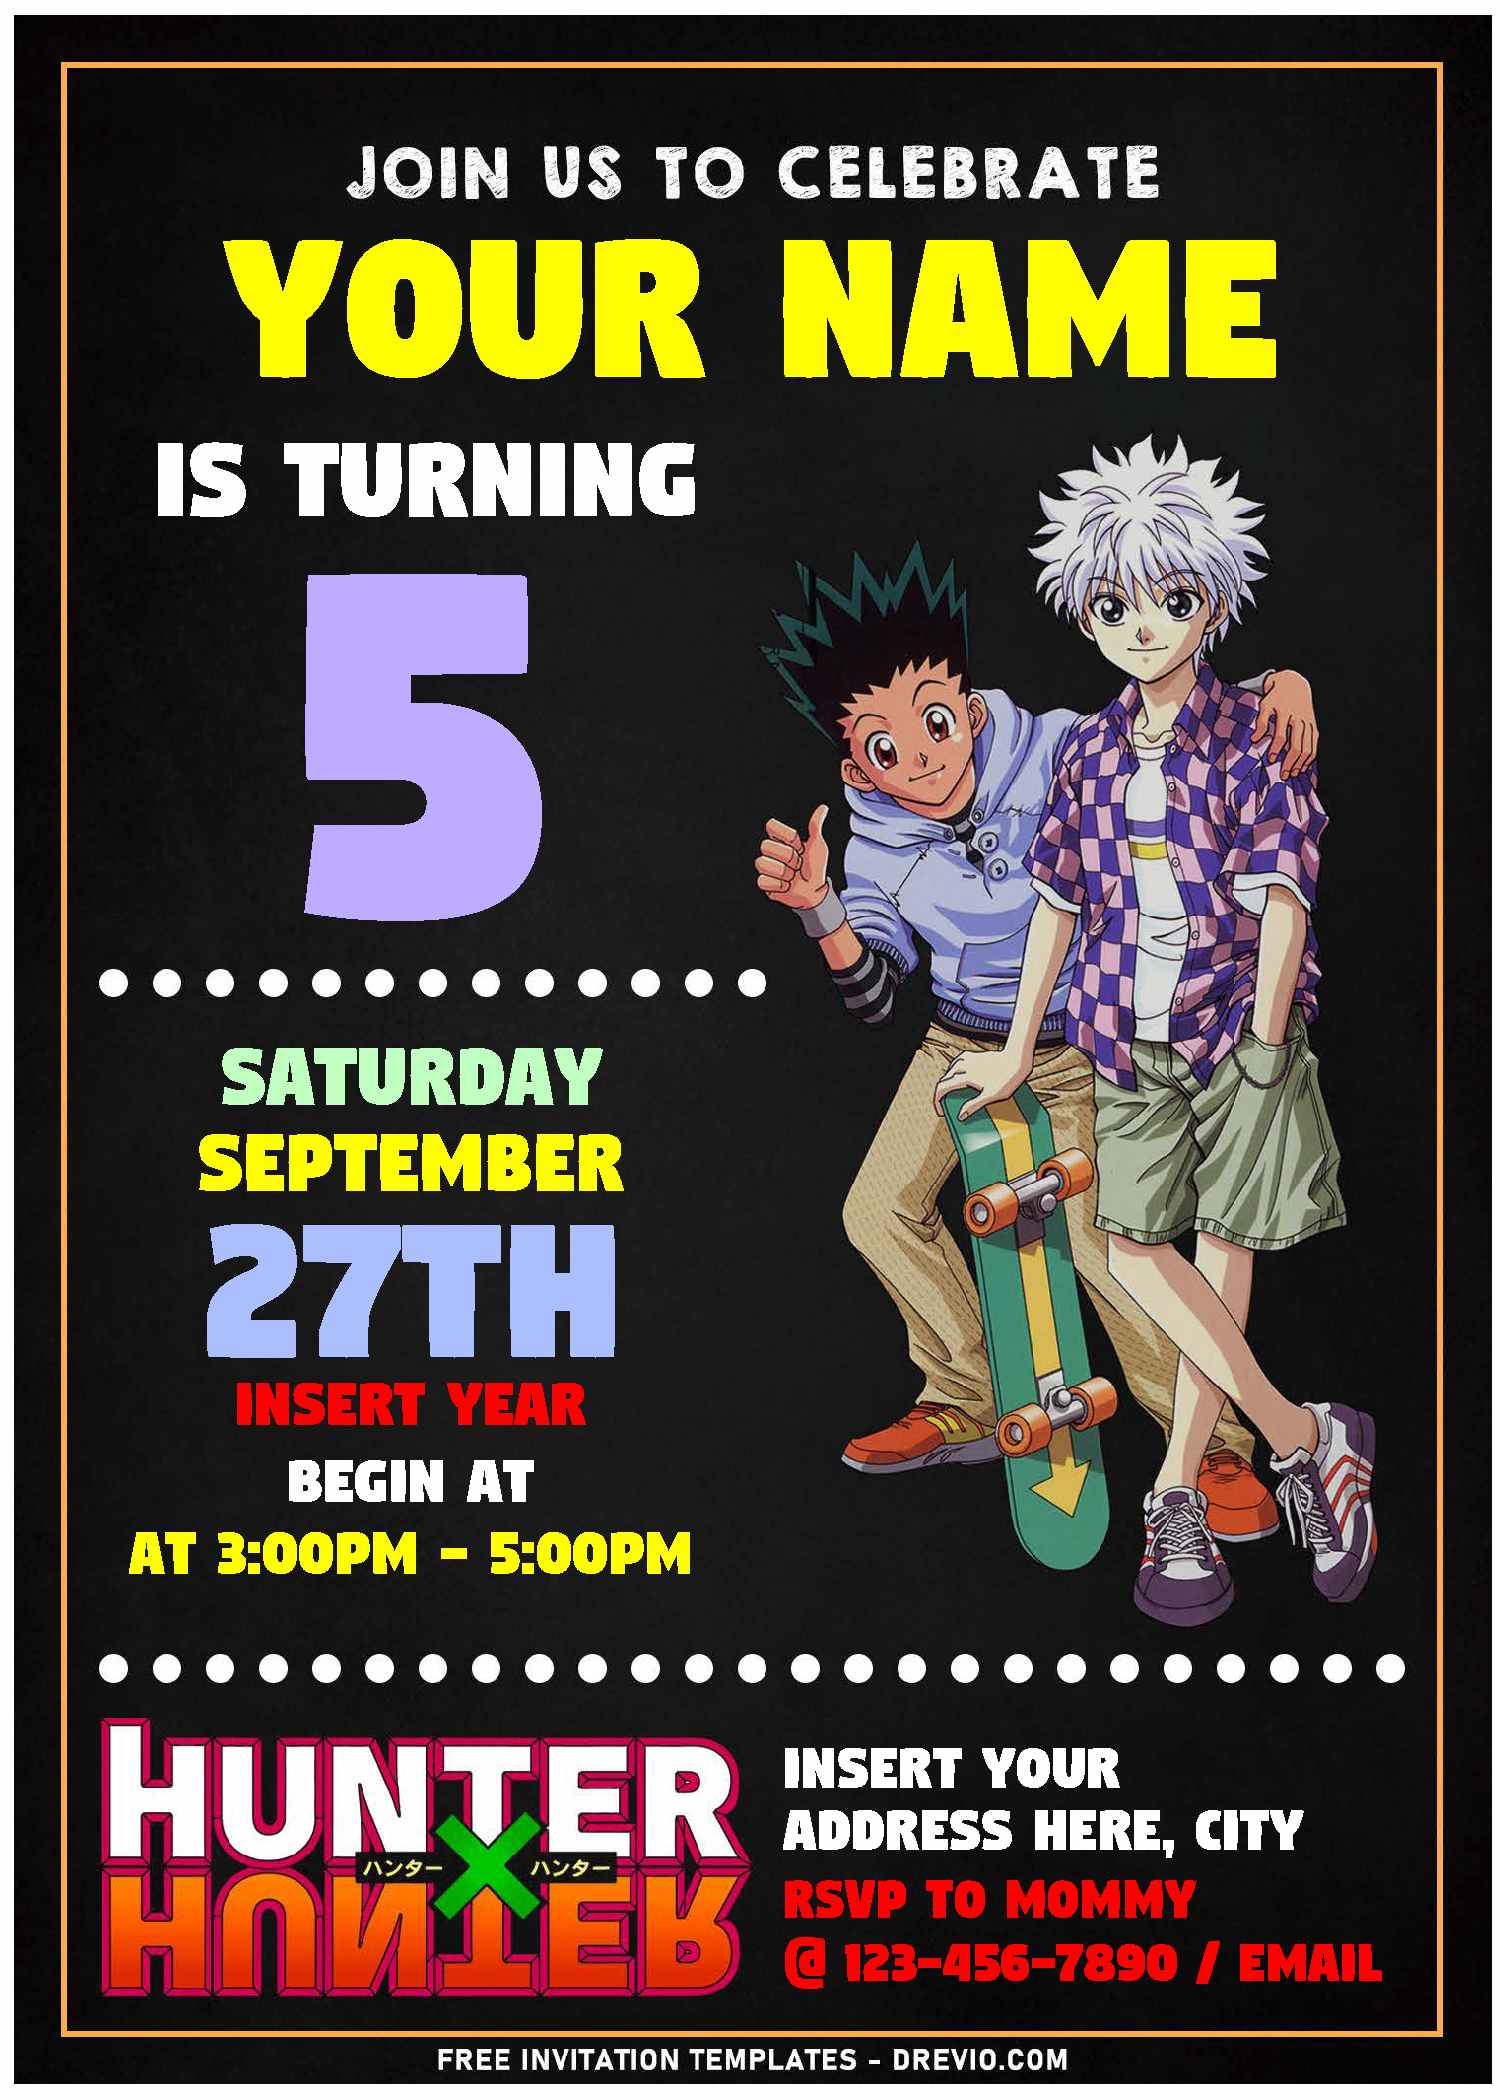 9 Cool My Hero Academia Birthday Invitation For Anime Fans  Birthday  invitations My hero academia Fun party themes